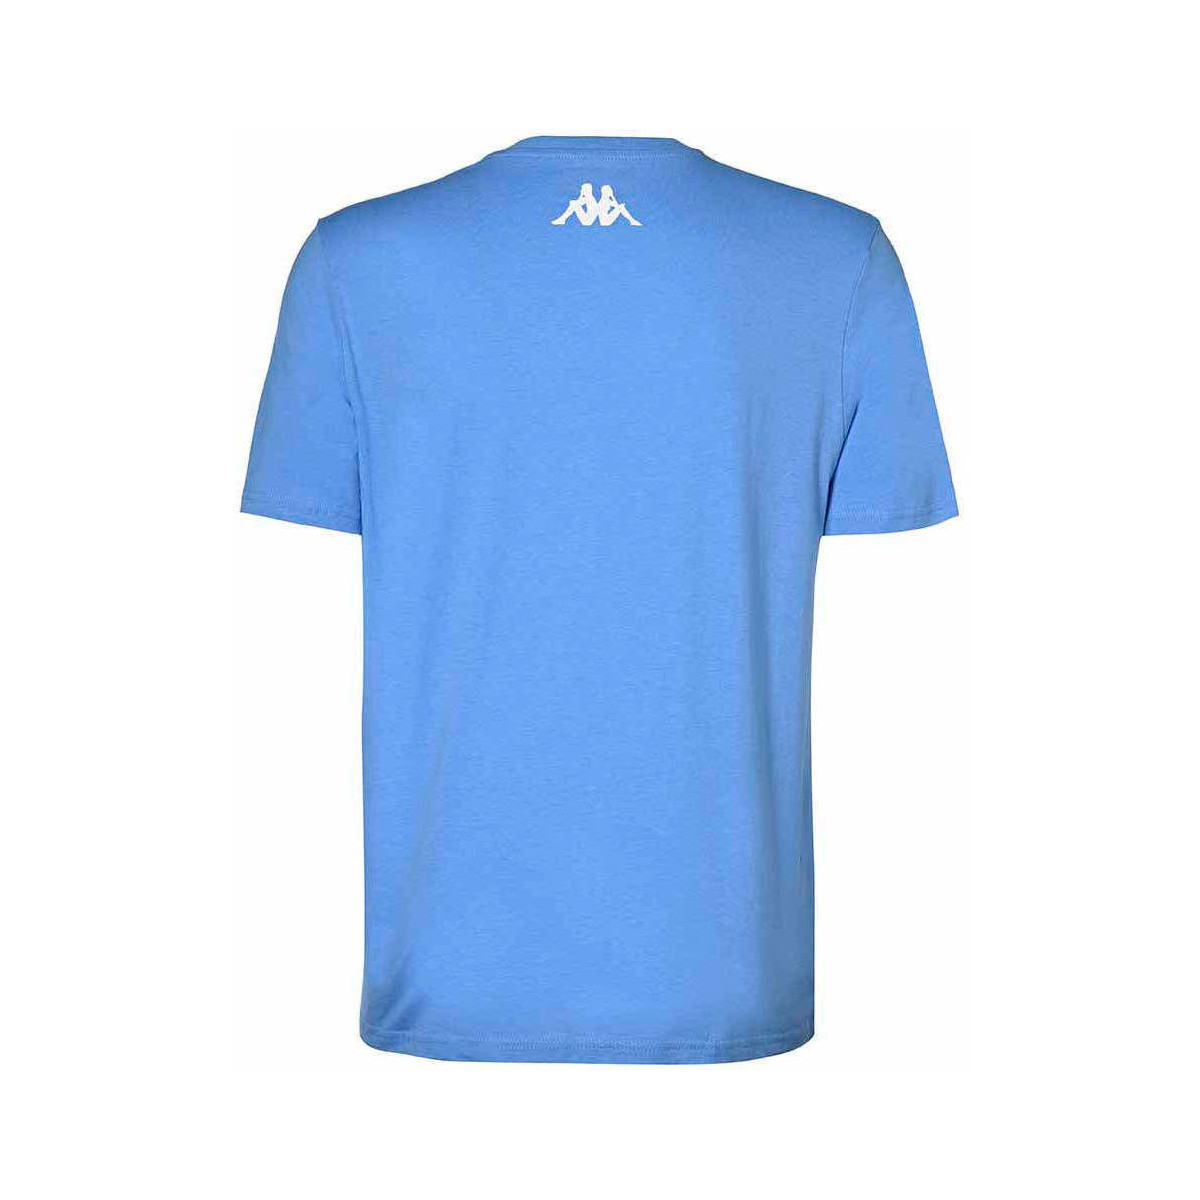 Kappa Bleu T-shirt Brizzo 2BUq3Ztf